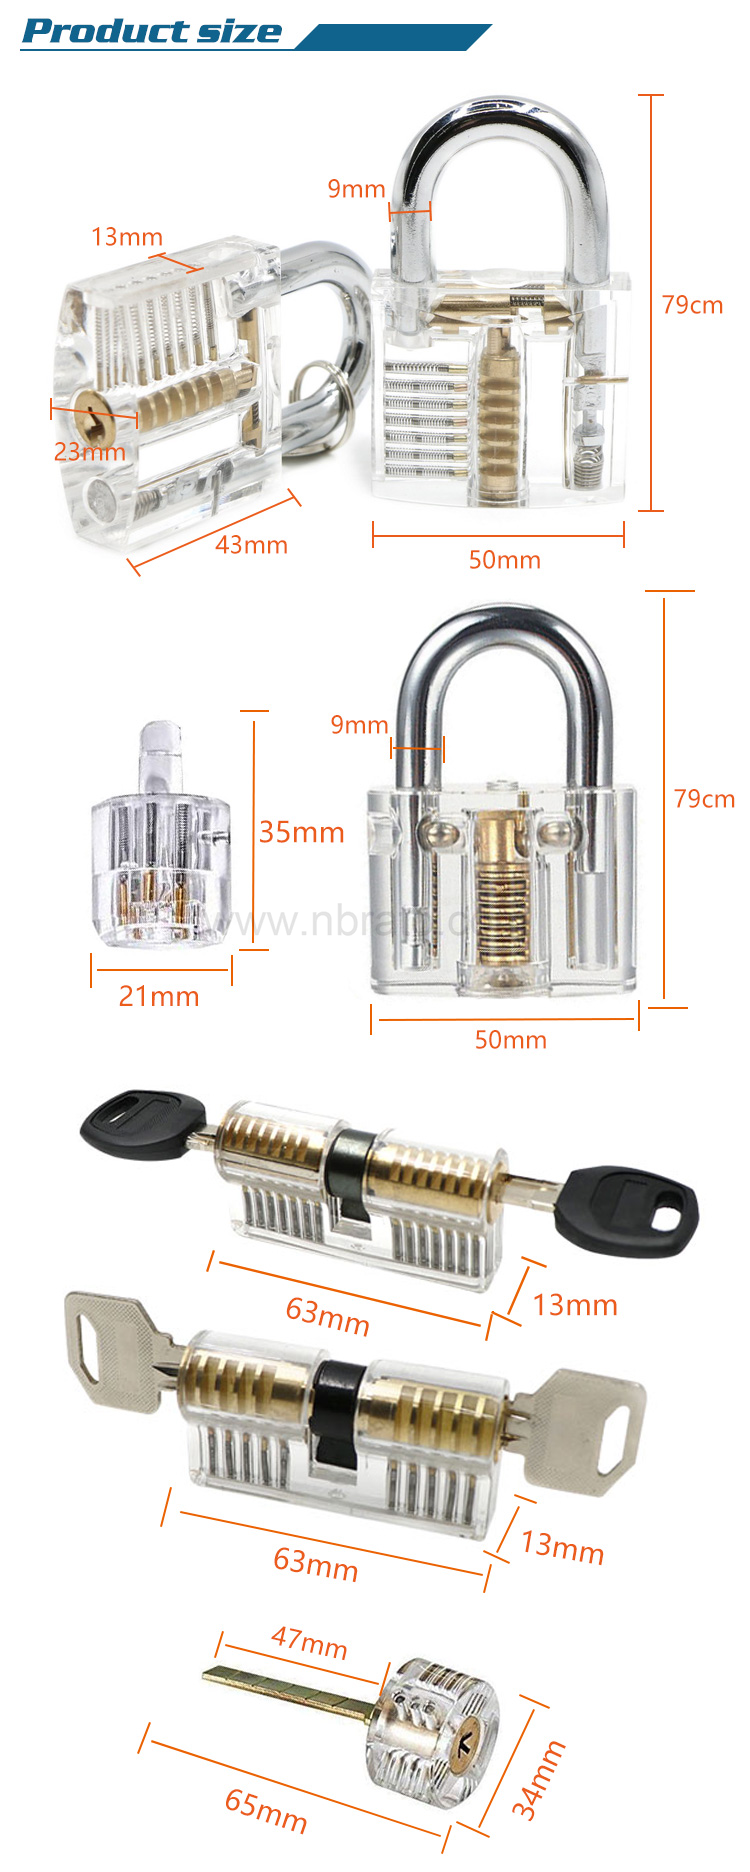 6-Piece Practice Lock Set for Beginner and Pro Locksmiths Transparent Padlock Professional Lock Picking Tool Kit